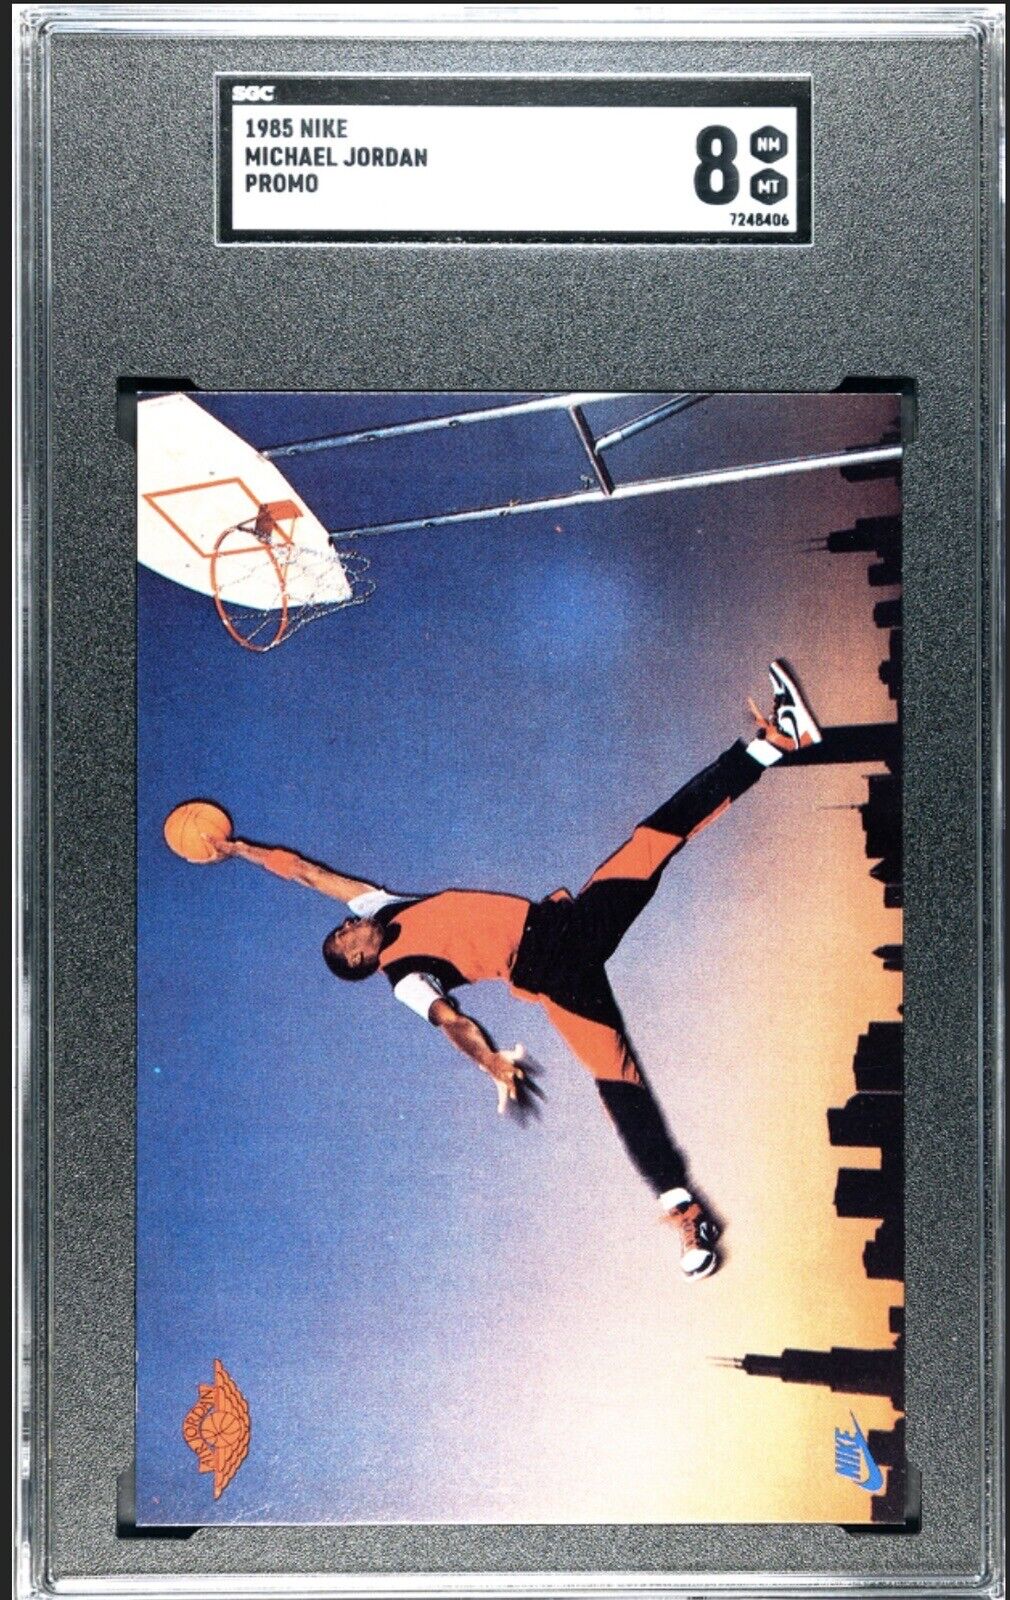 1985 NIKE PROMO Michael Jordan RC SGC 8 NEAR MINT-MINT- Stunning- Low Pop!!